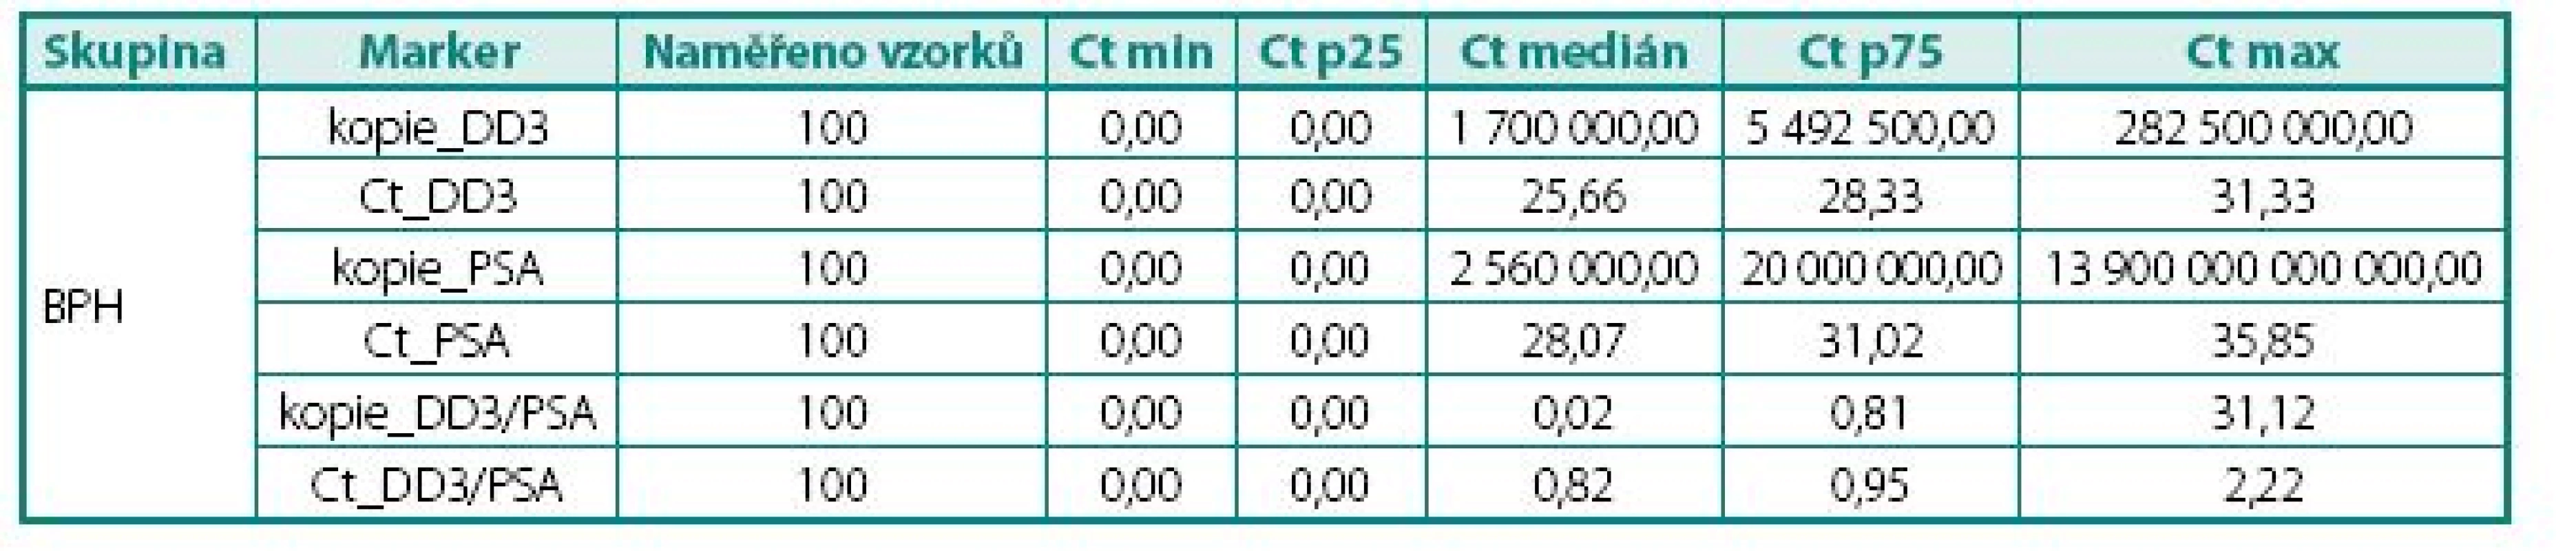 Naměřené hodnoty exprese mRNA ve tkáni, skupina s BPH
Table 3. The values of DD3PCA3 mRNA expression in BPH tissue